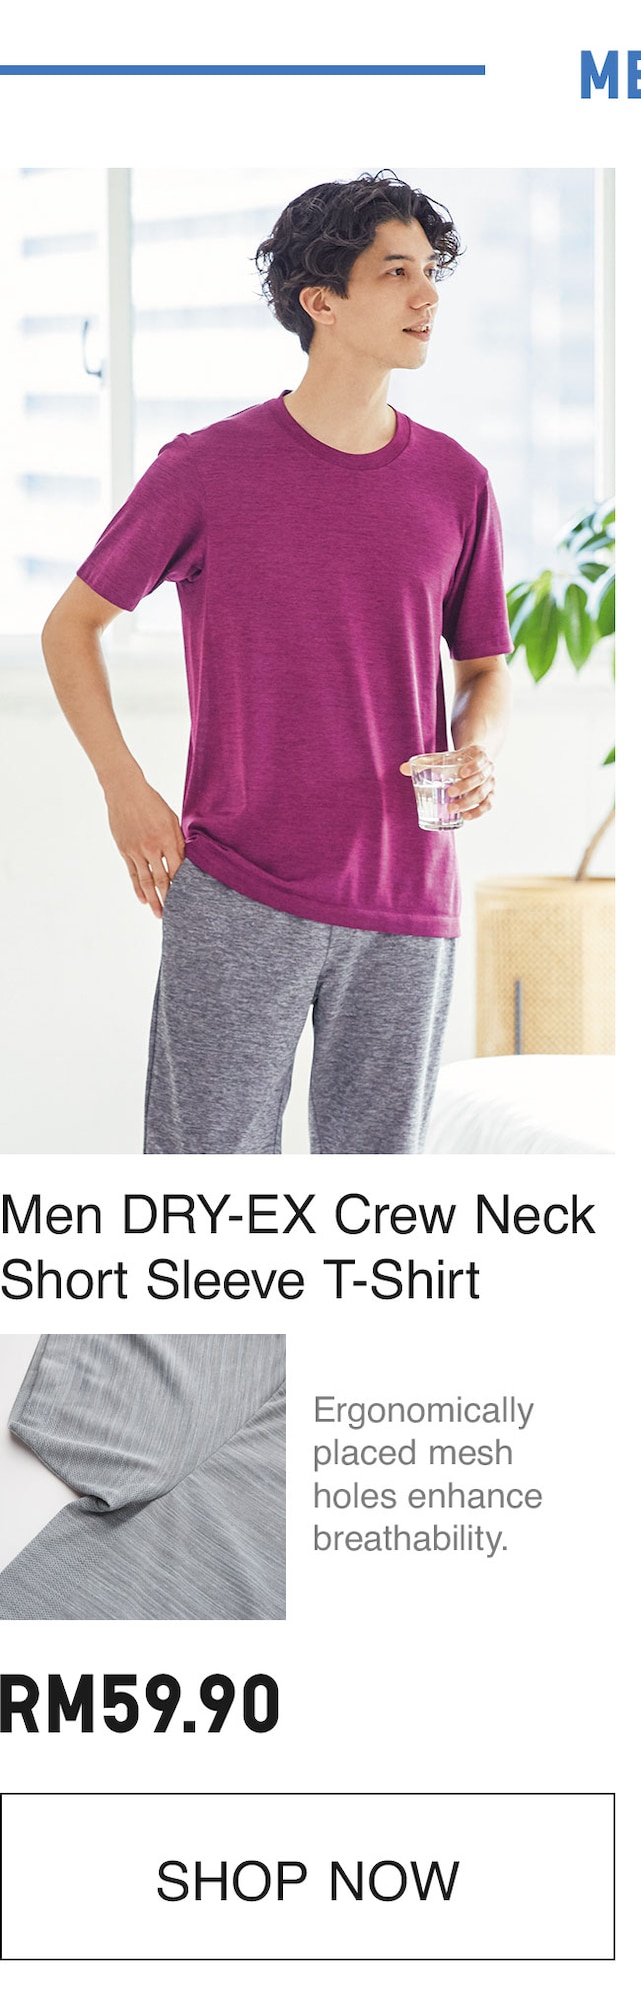 MEN DRY EX T-SHIRT